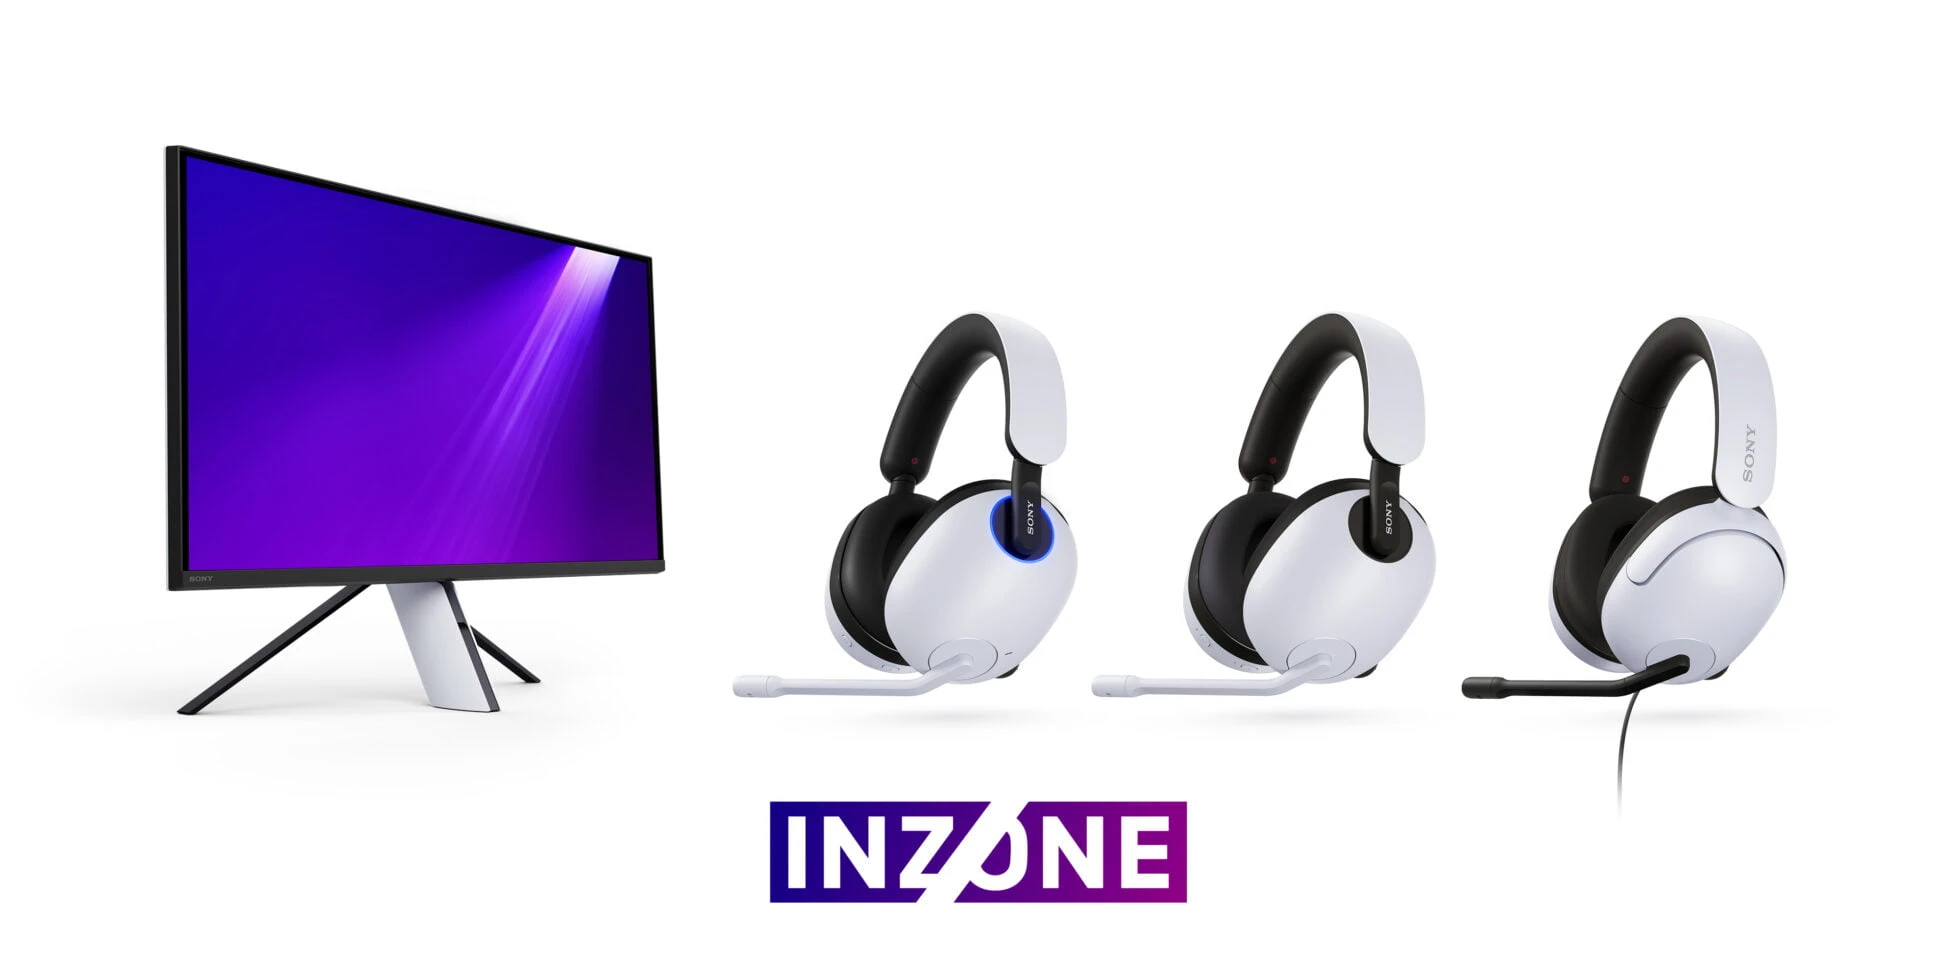 Sony INZONE - new Sony brand of gaming equipment